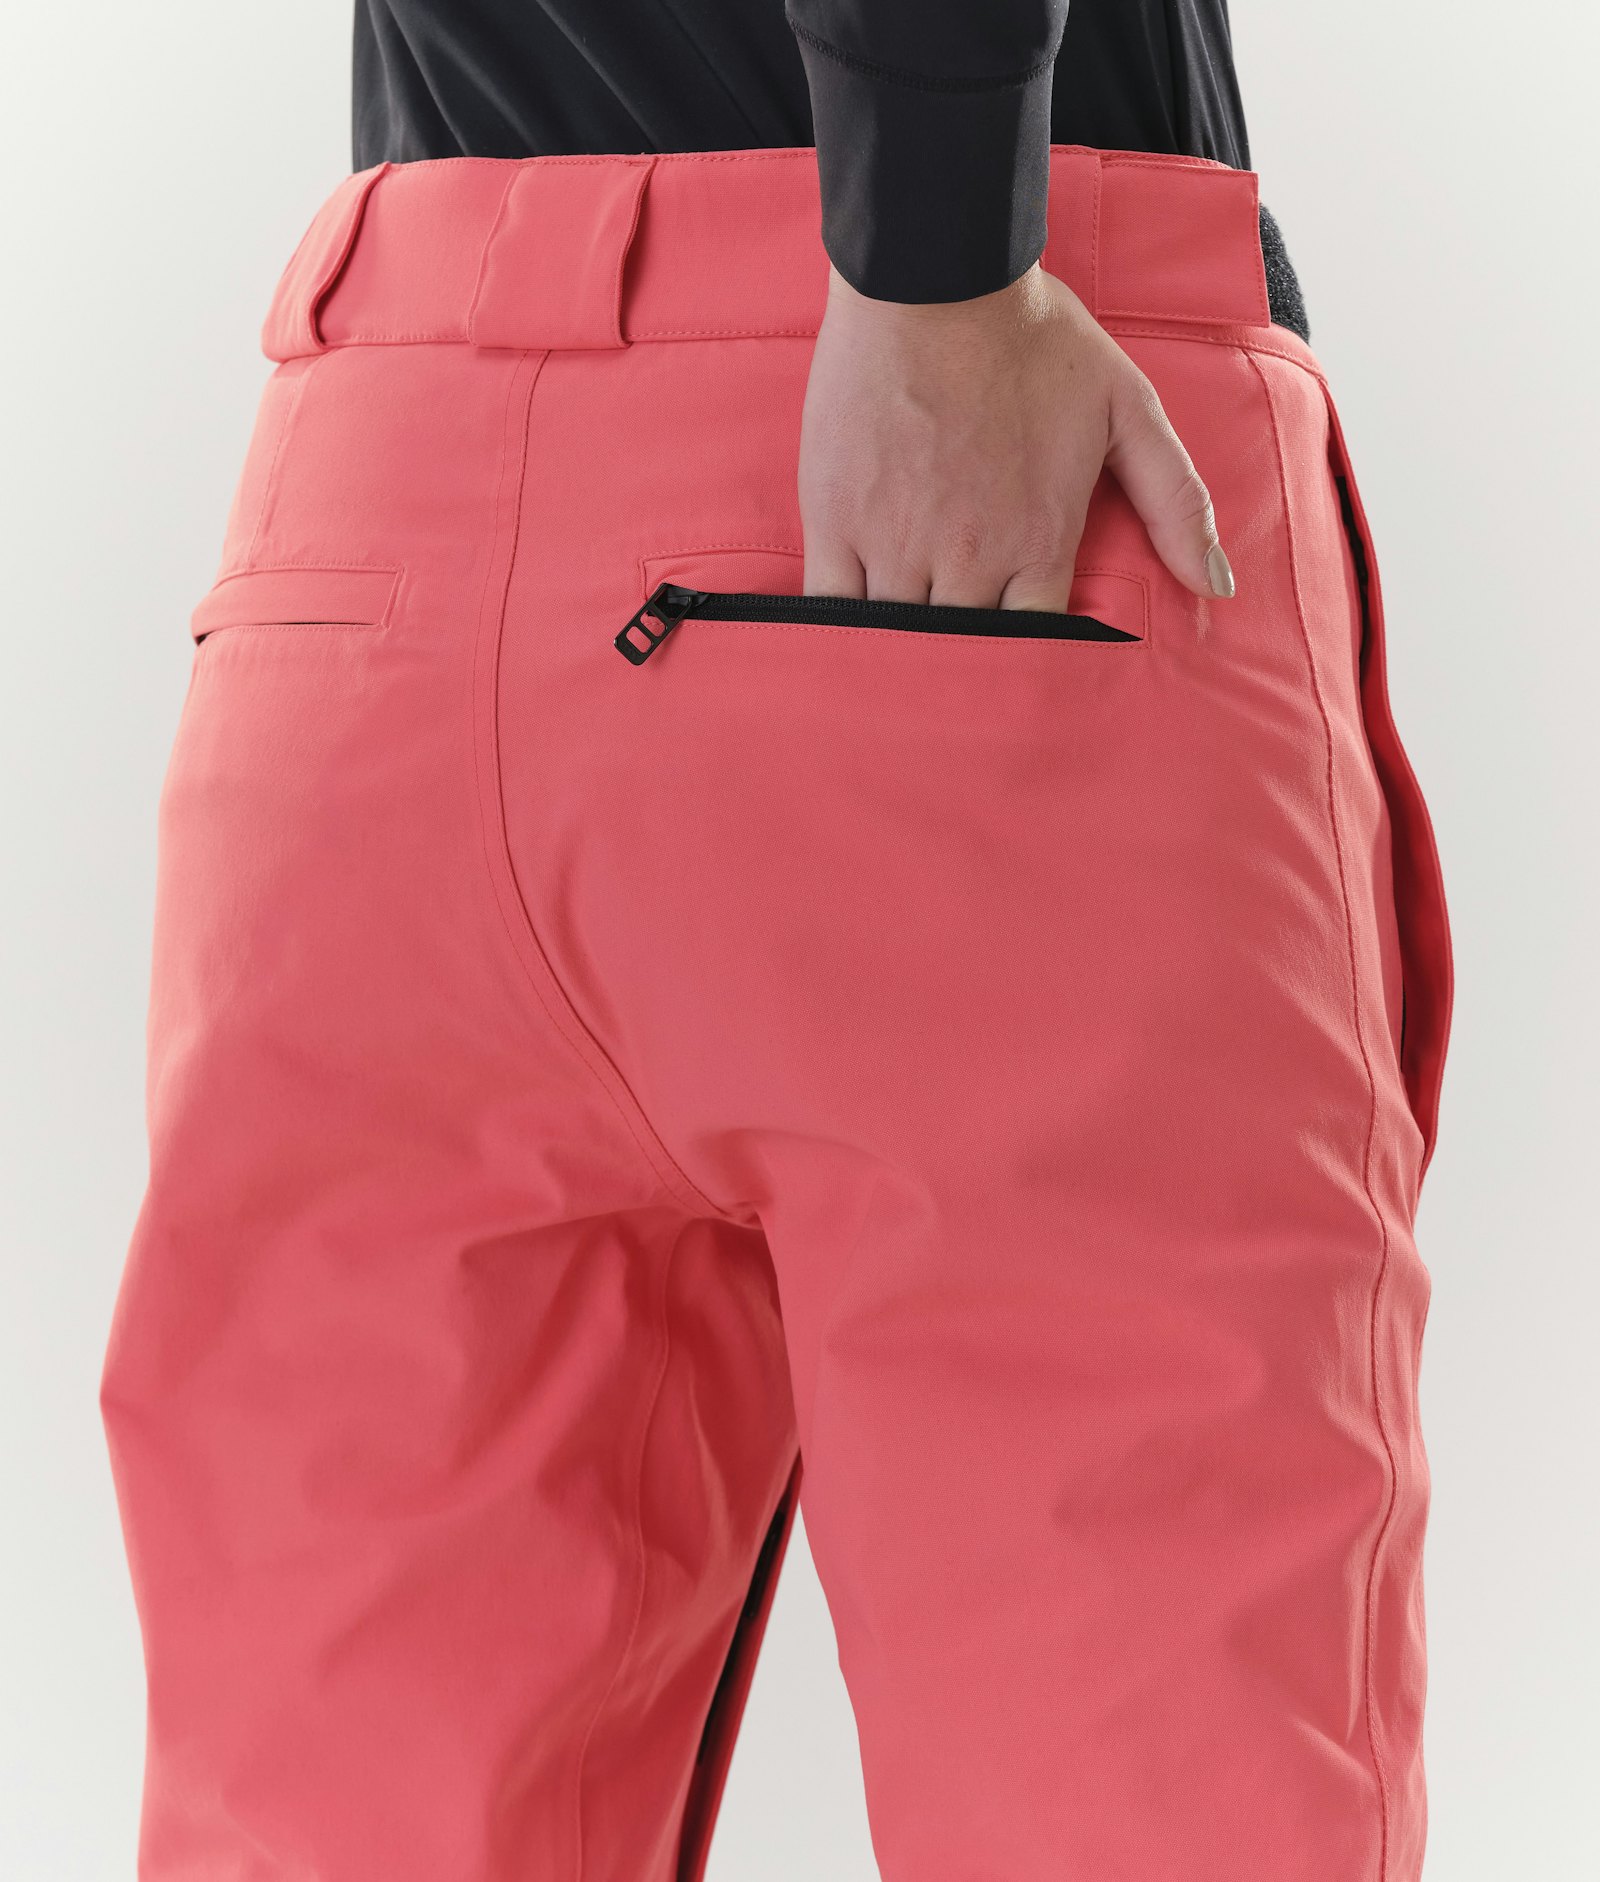 Dope Con W 2020 Kalhoty na Snowboard Dámské Coral